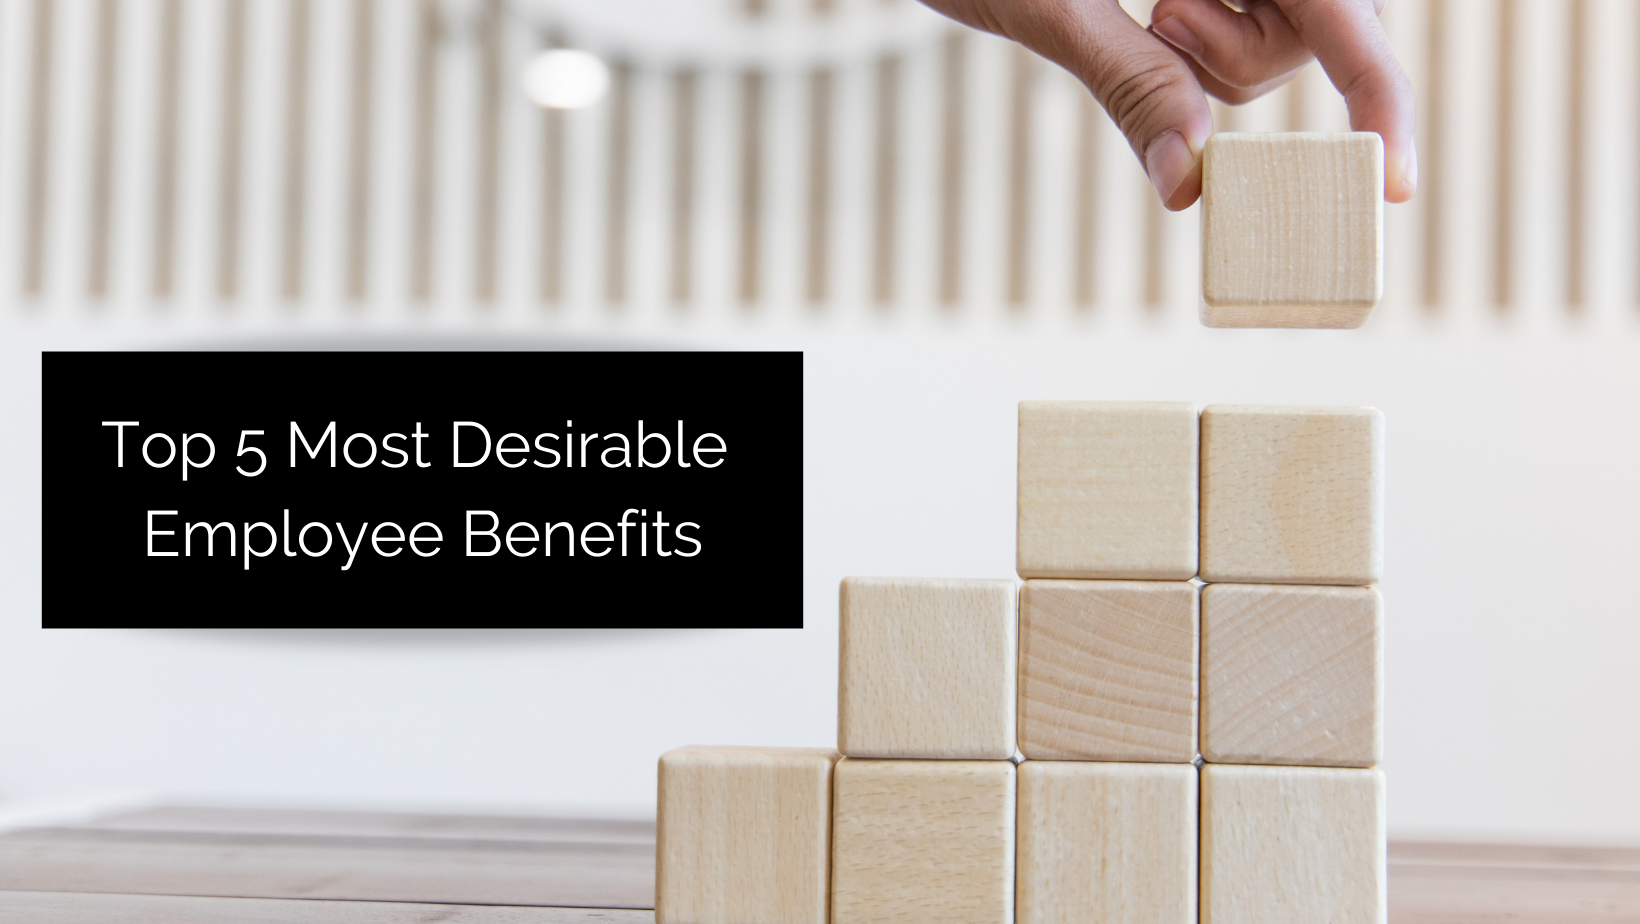 Top 5 Most Desirable Employee Benefits